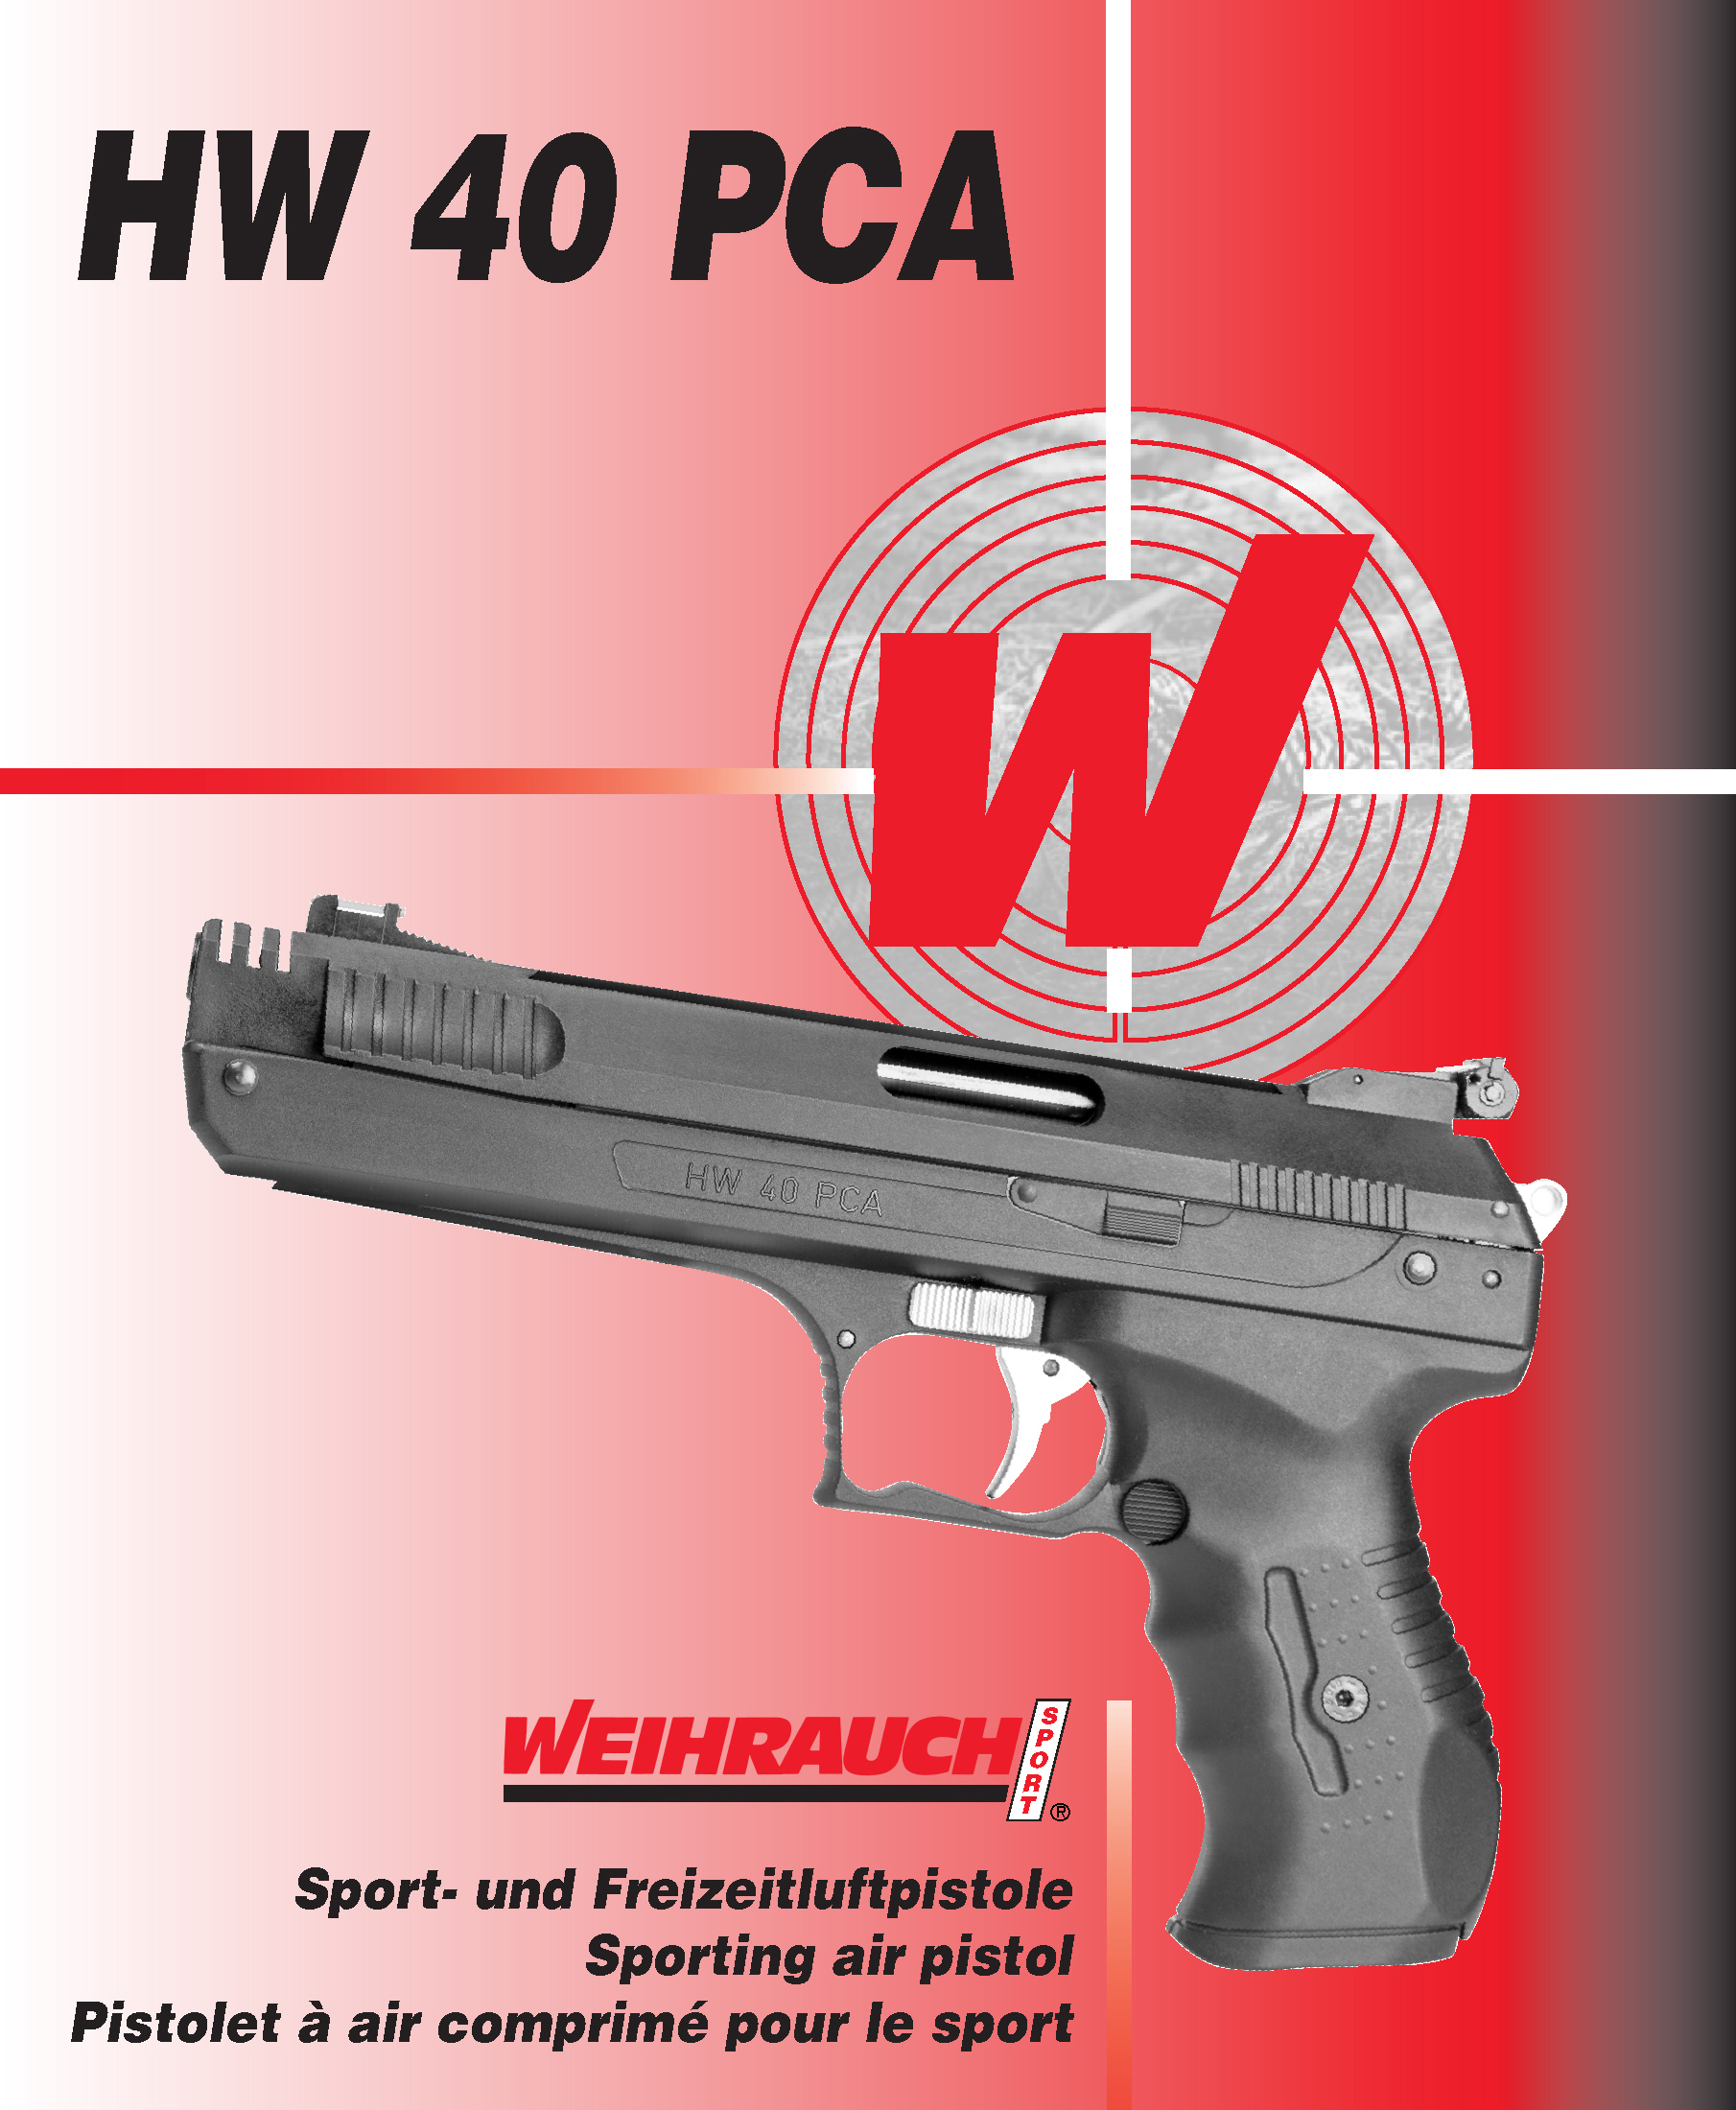 Manual WW Luftpistole HW 40 PCA 05 2015 1